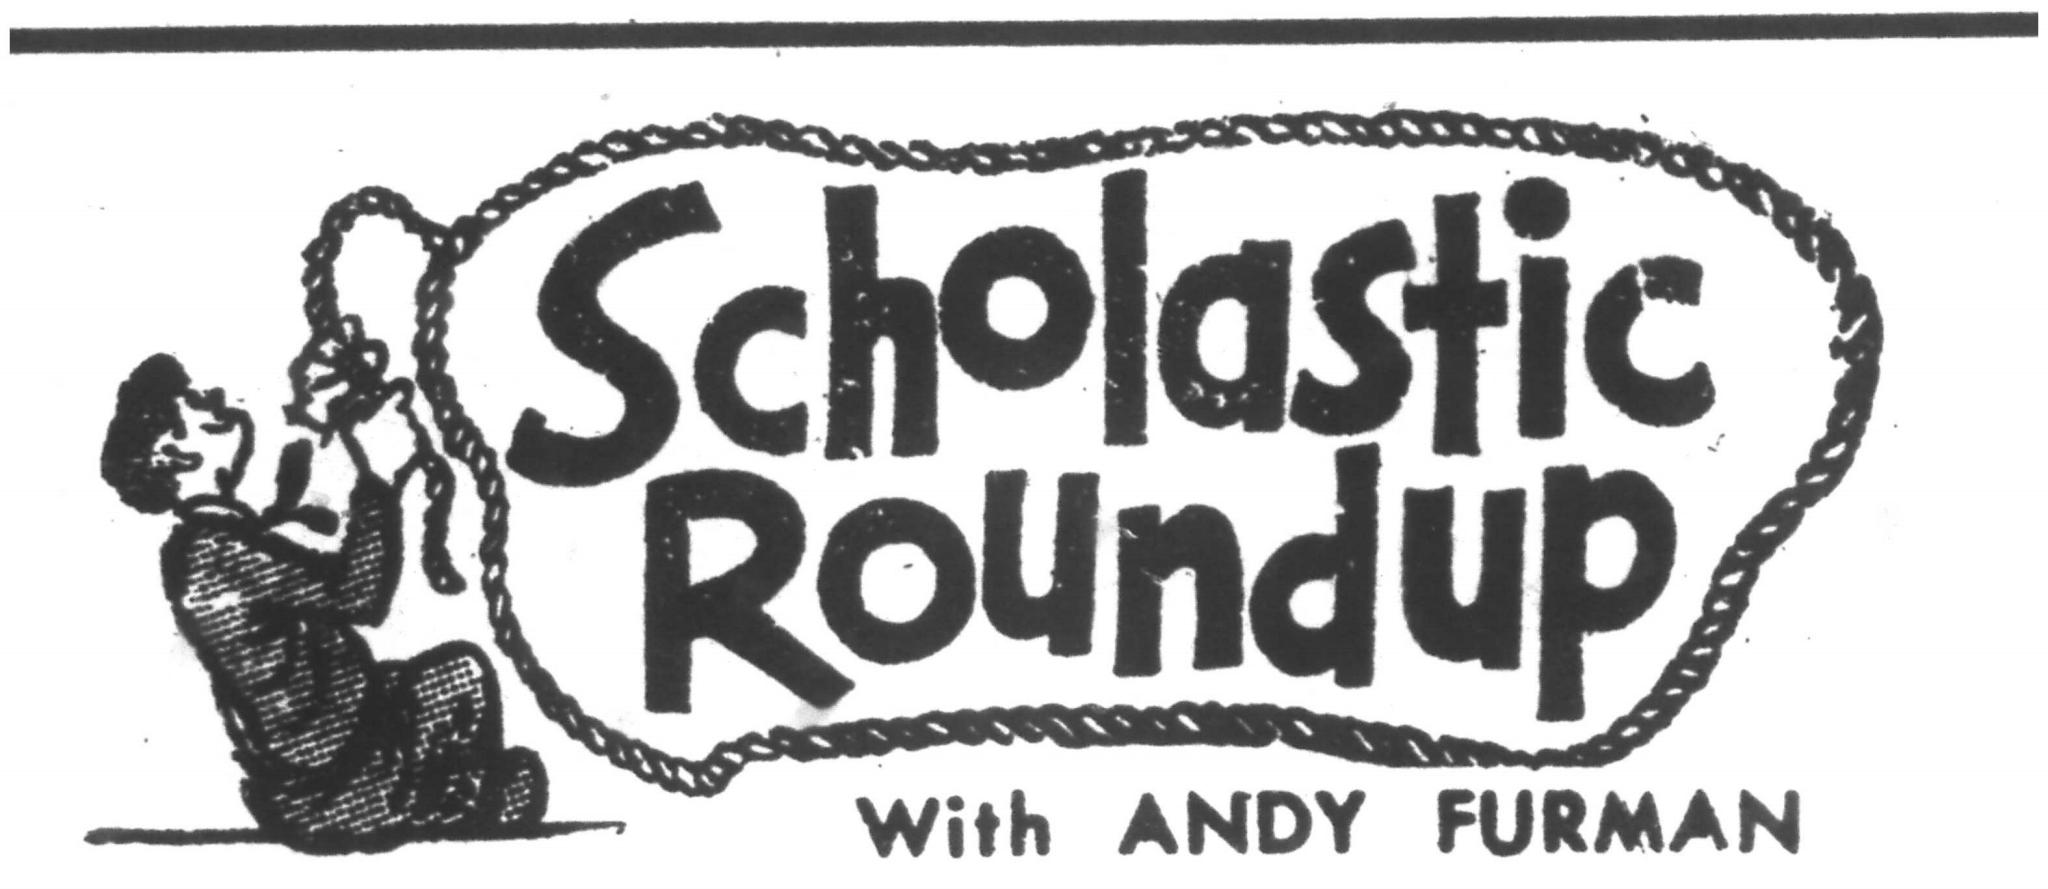 Scholastic Entertainment, Logopedia